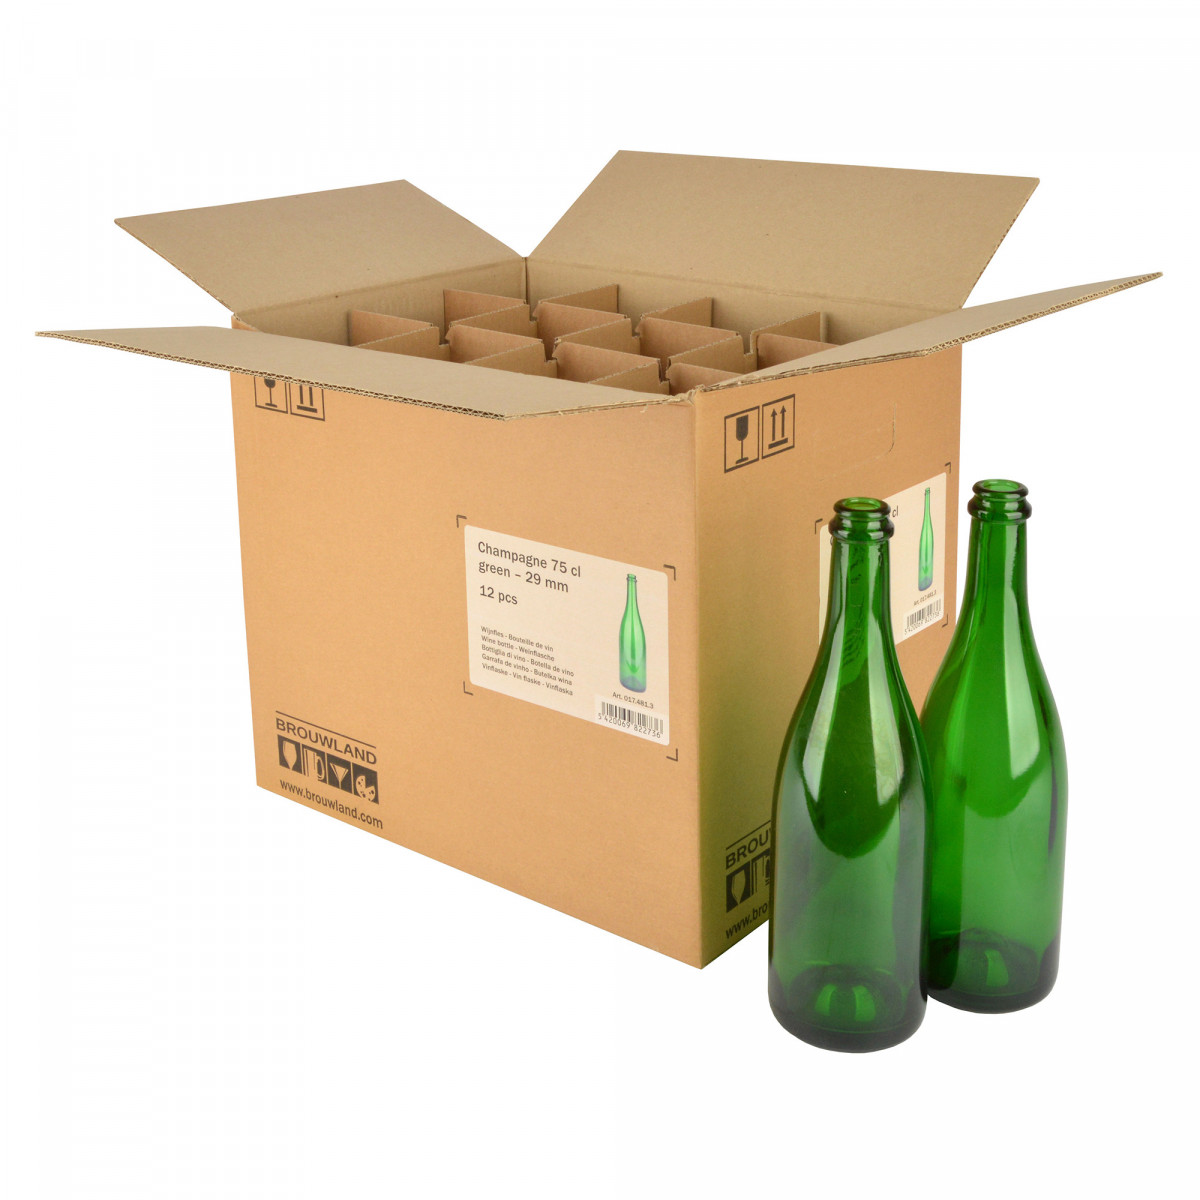 Wine bottle Champagne 75 cl, 775 g, groen, 29 mm, doos 12 pcs